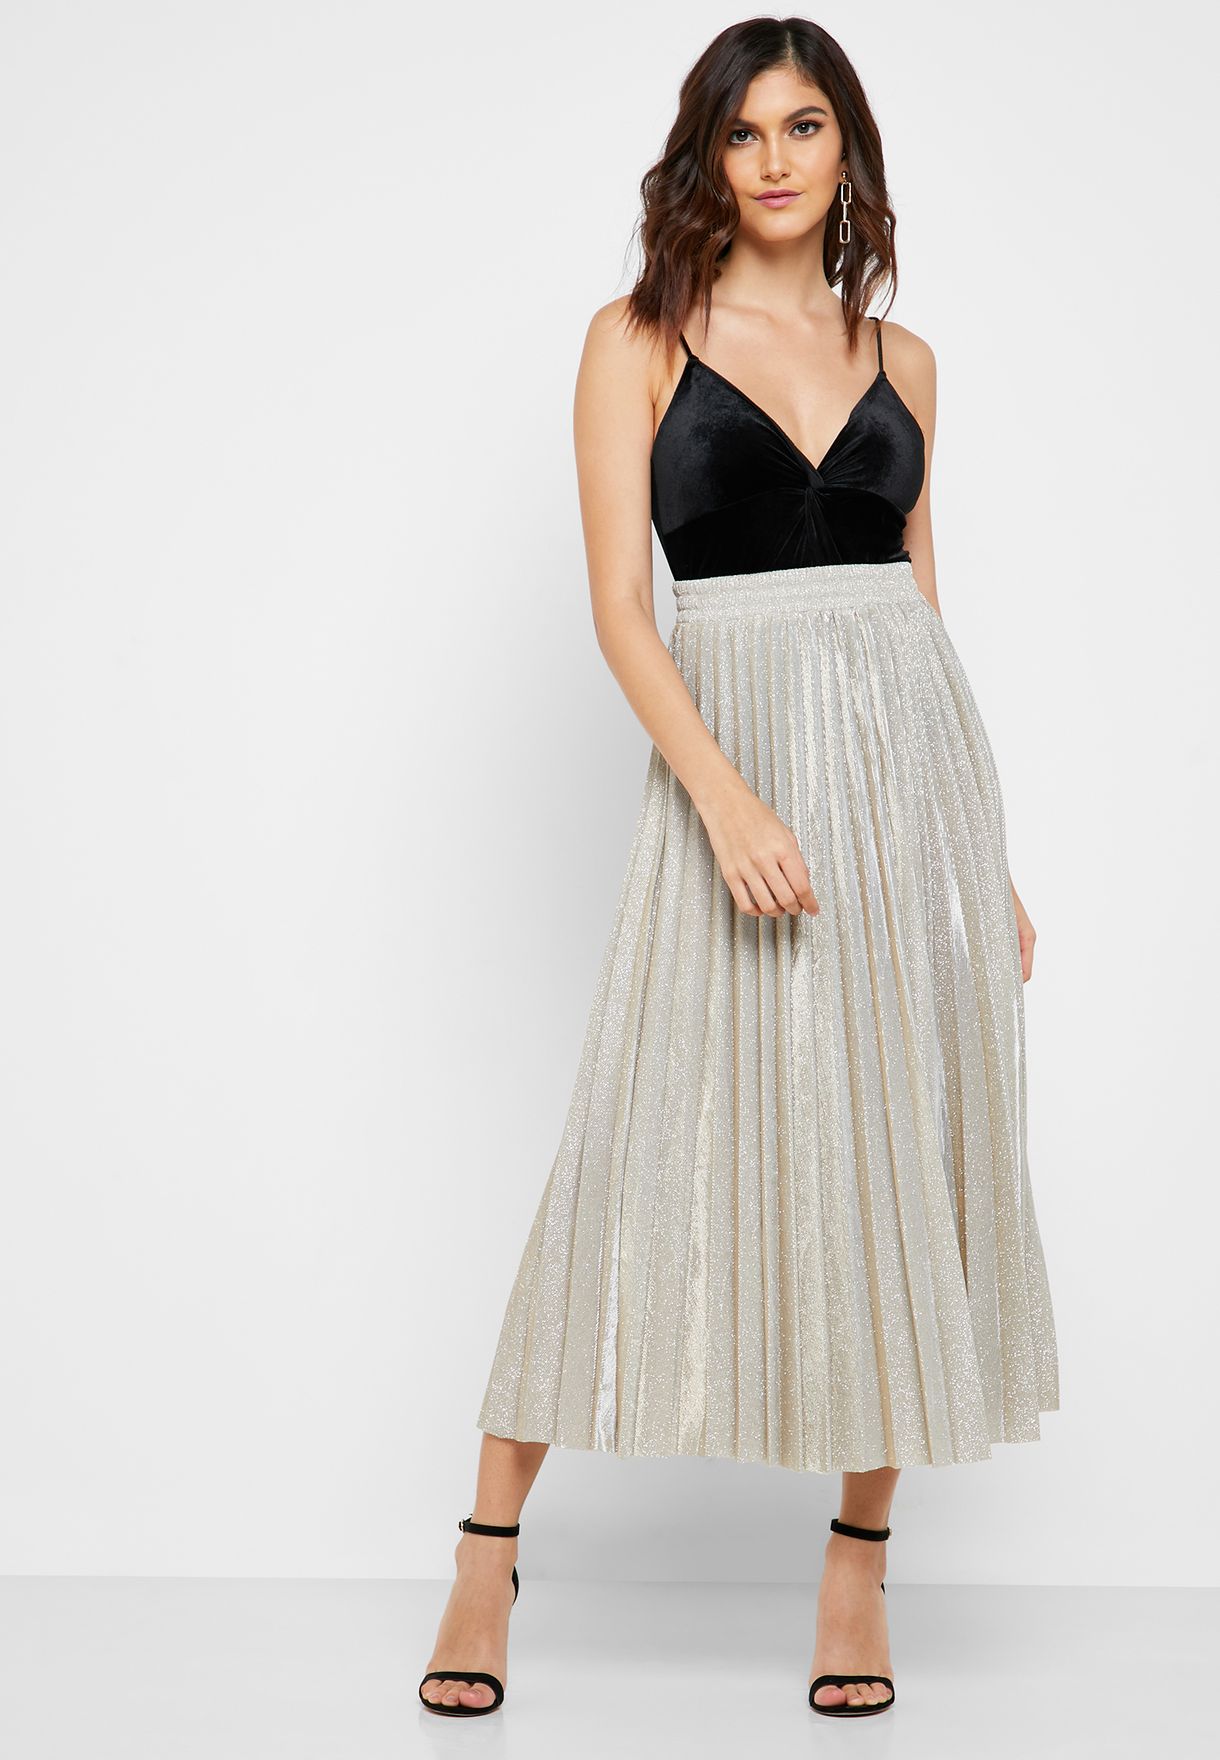 metallic pleated skirt new look